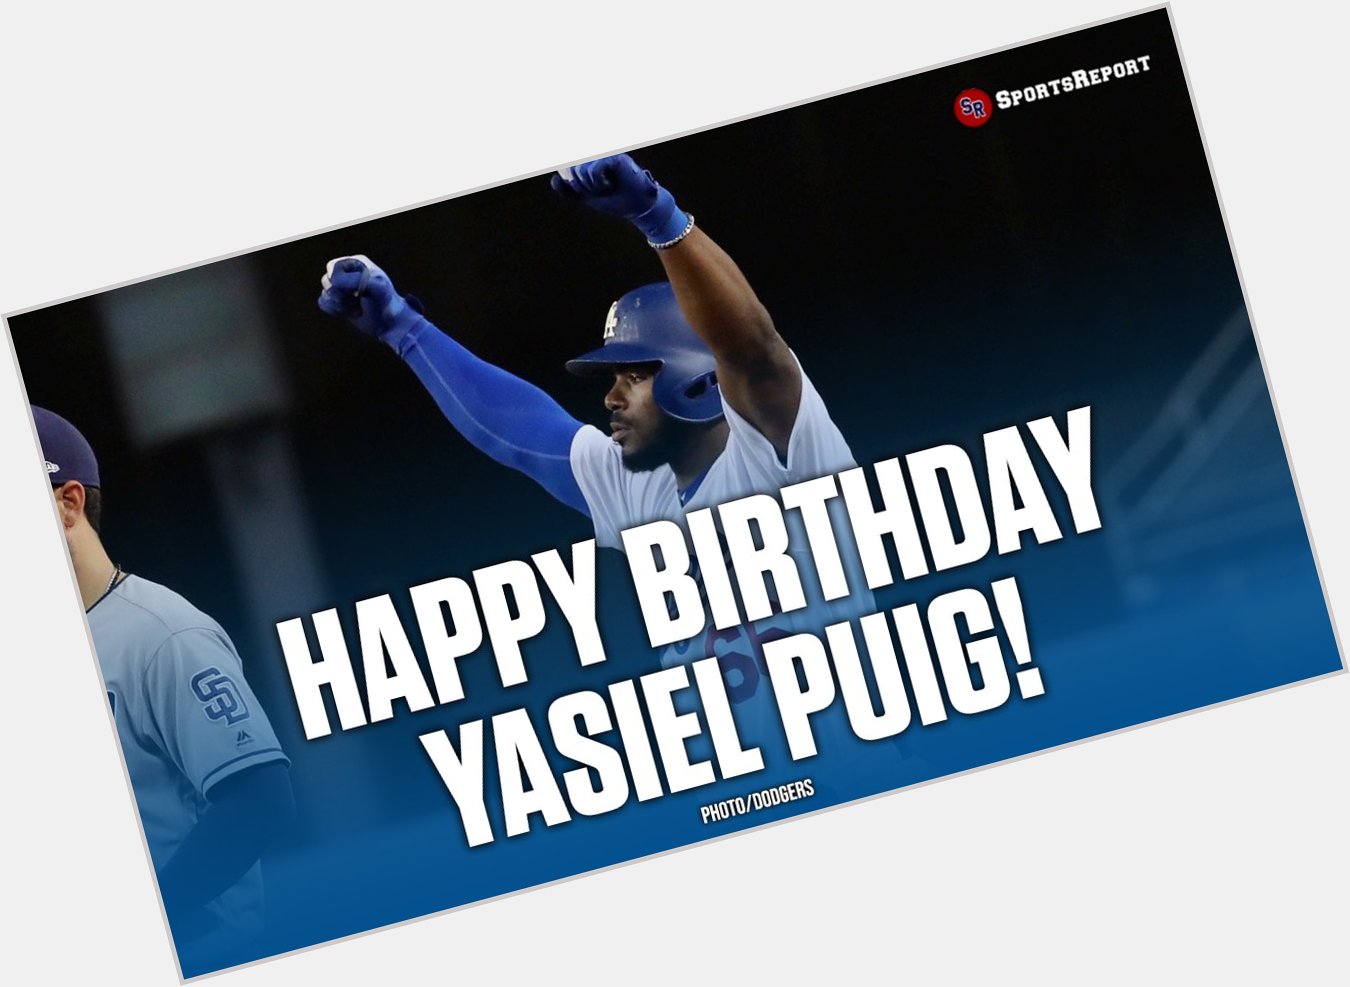  Fans, let\s wish Yasiel Puig a Happy Birthday! GO DODGERS!! 